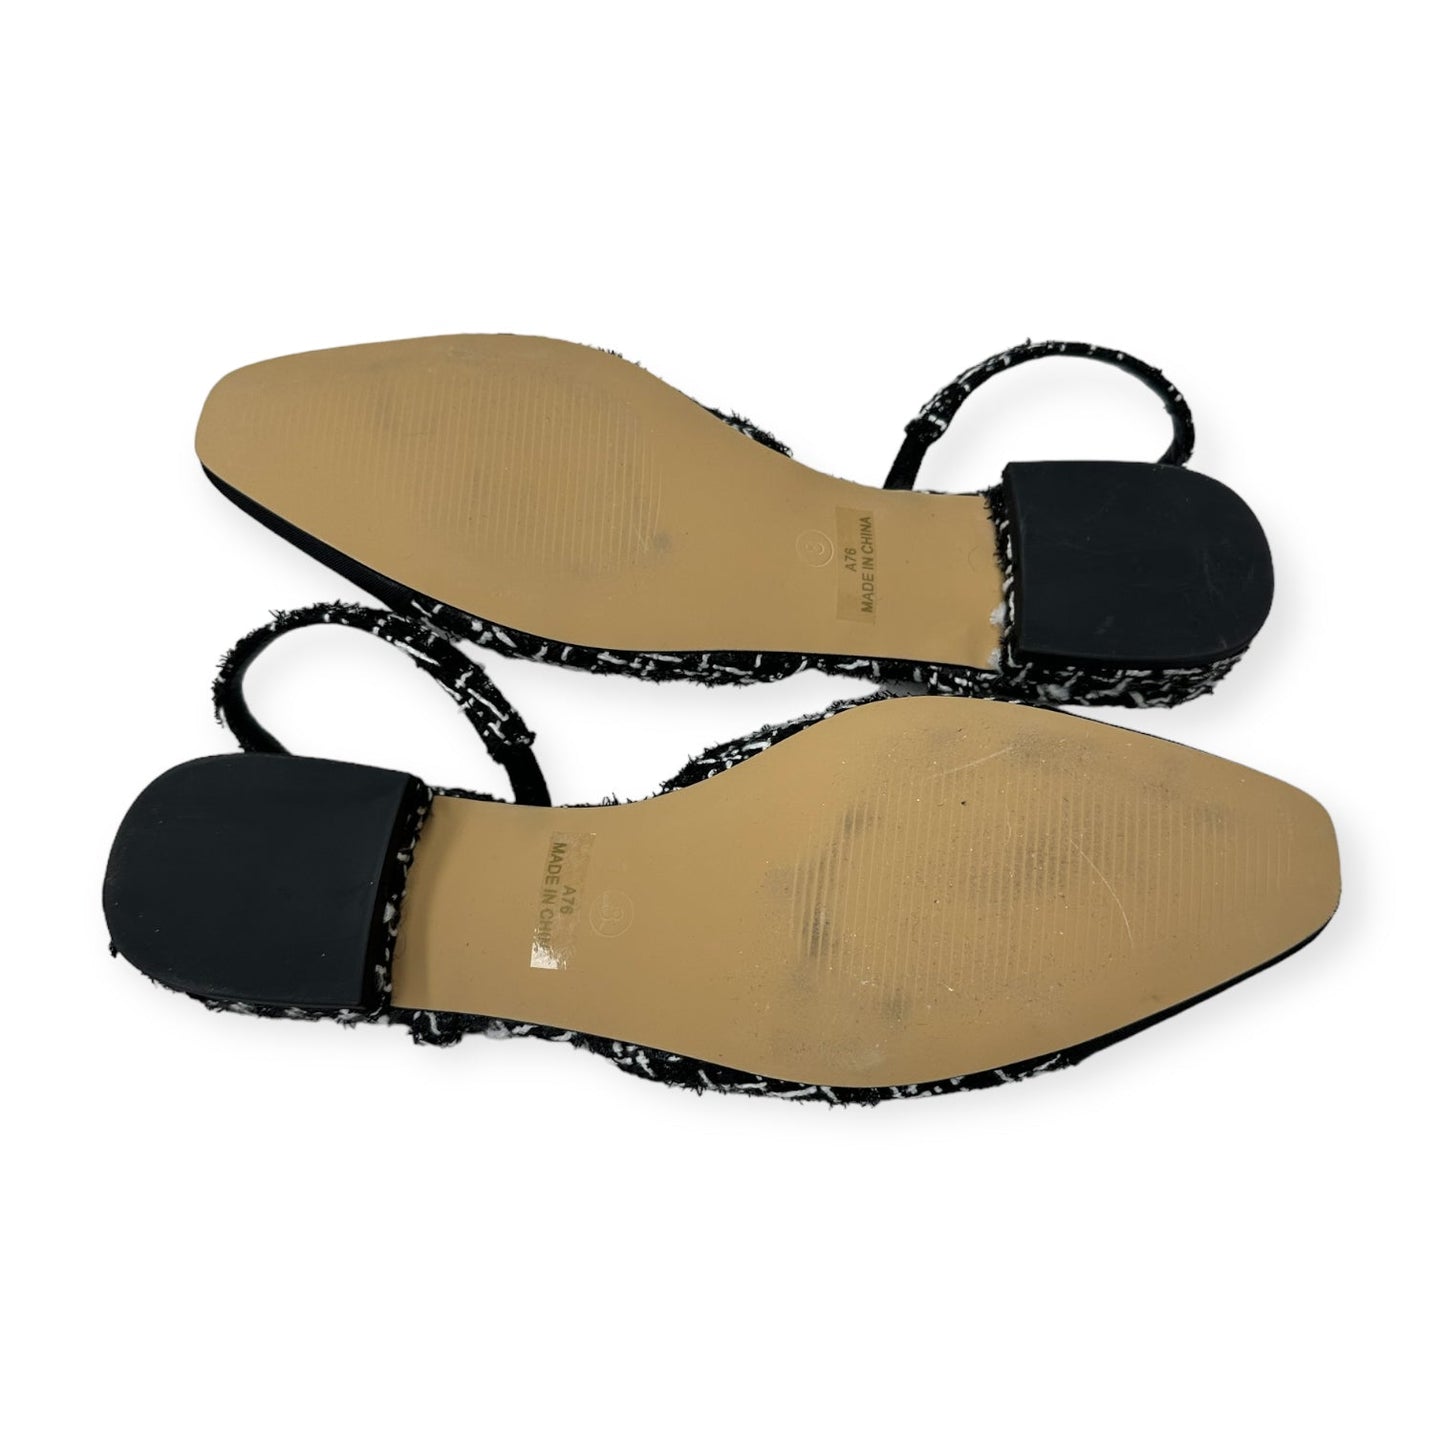 Black & White Sandals Flats Clothes Mentor, Size 8